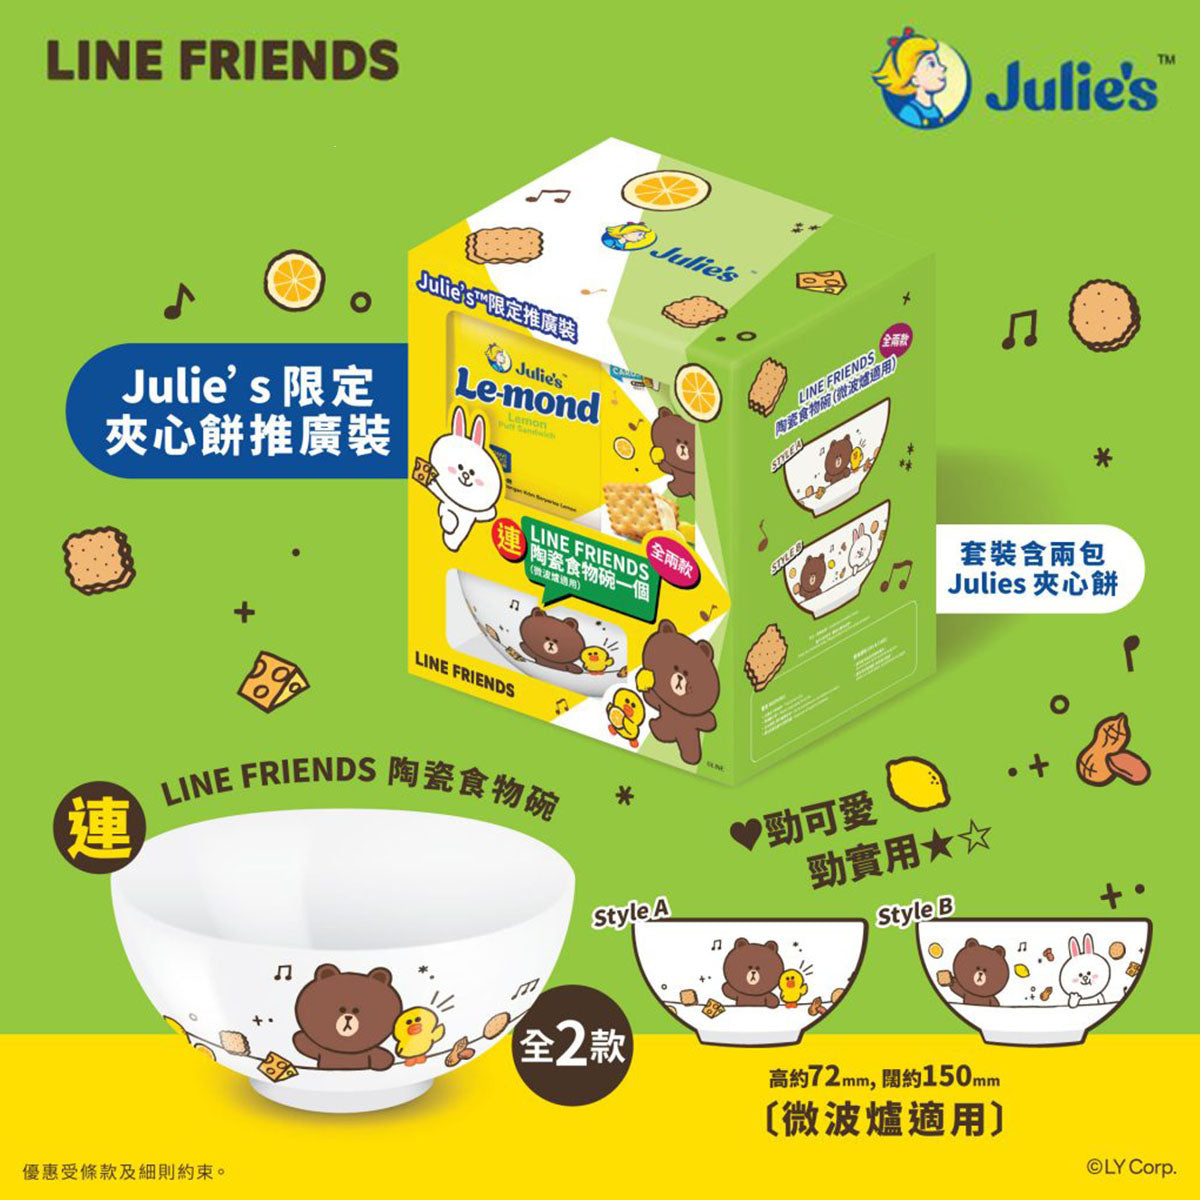 Bowl - Line Friends Julie's (Hong Kong 7-Eleven Edition)